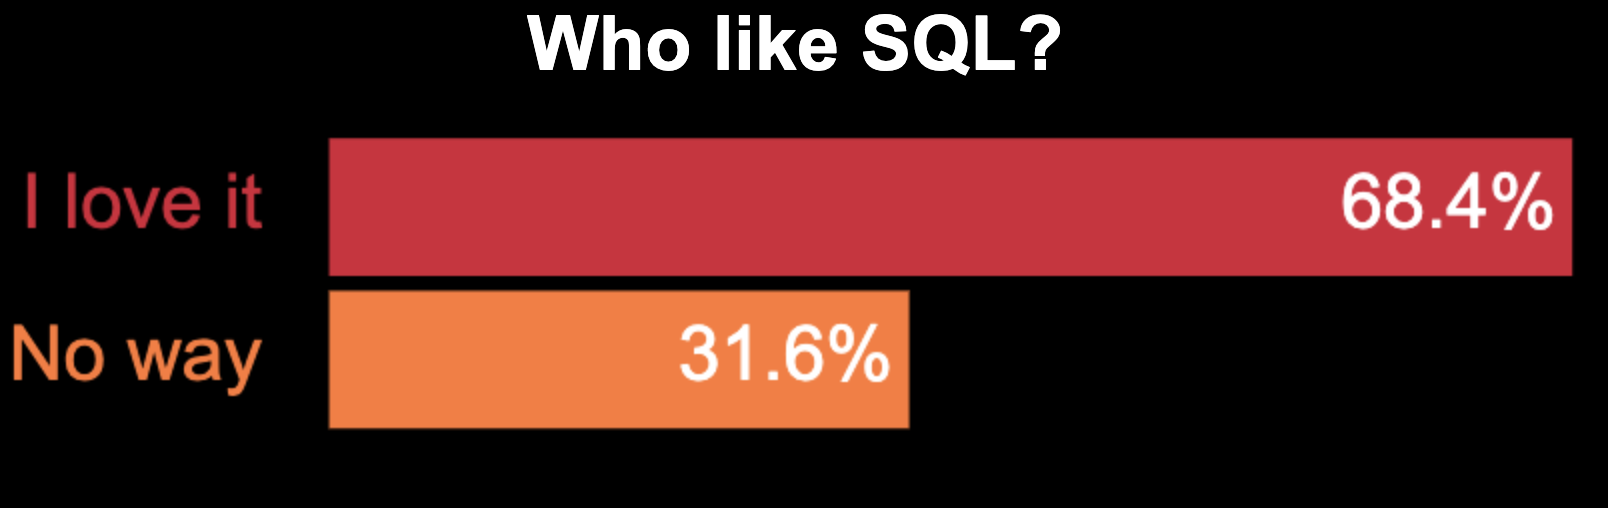 Poll of Who like SQL